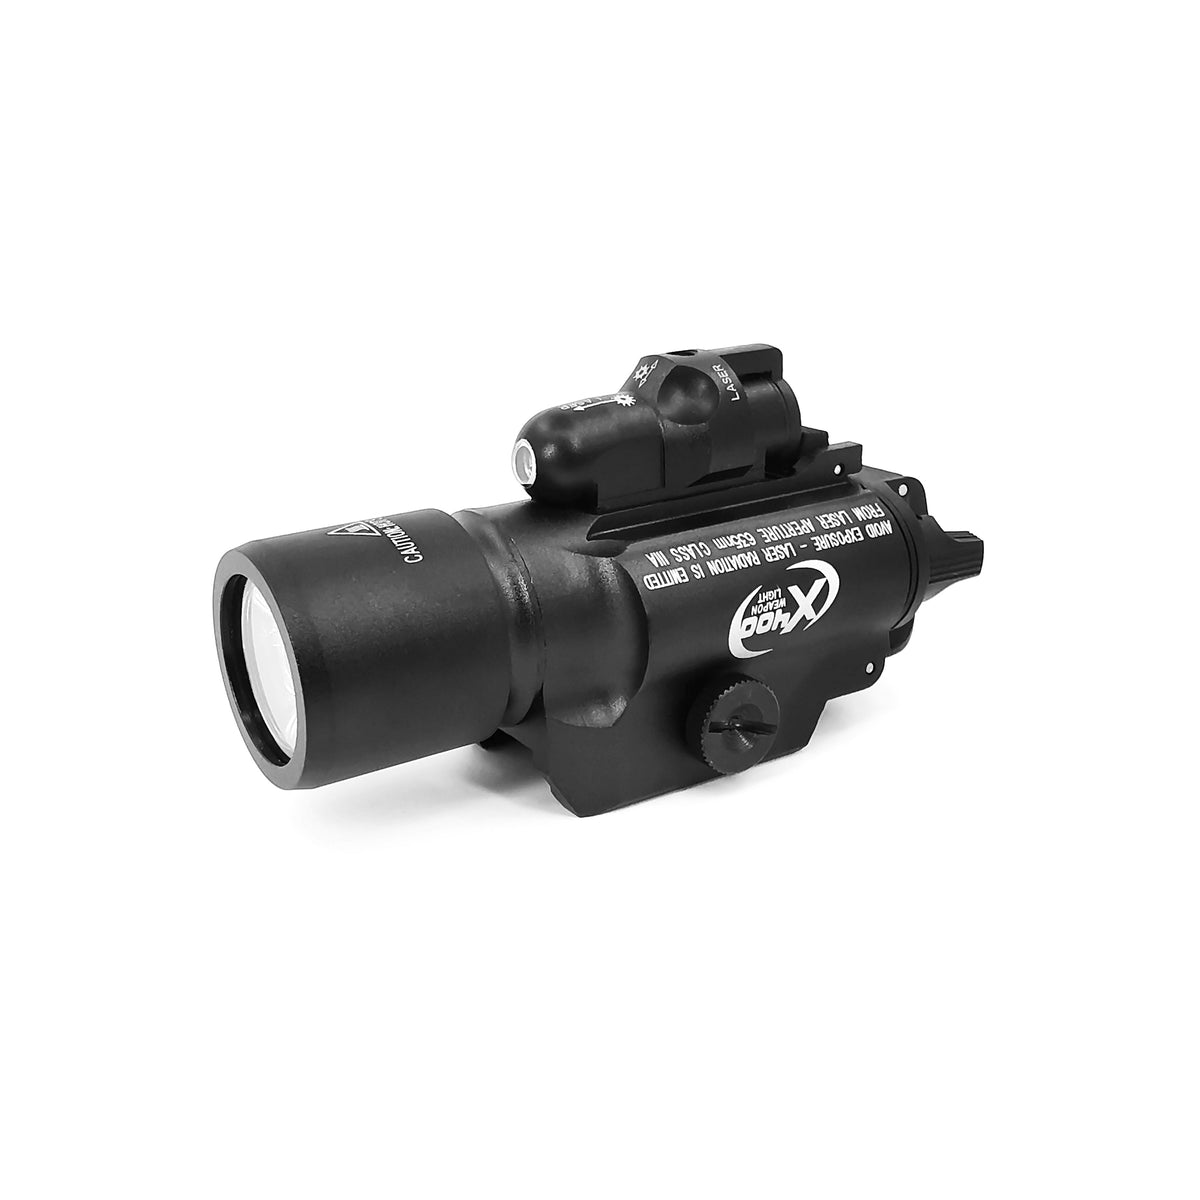 X400 LED Pistol Rifle Weapon Light